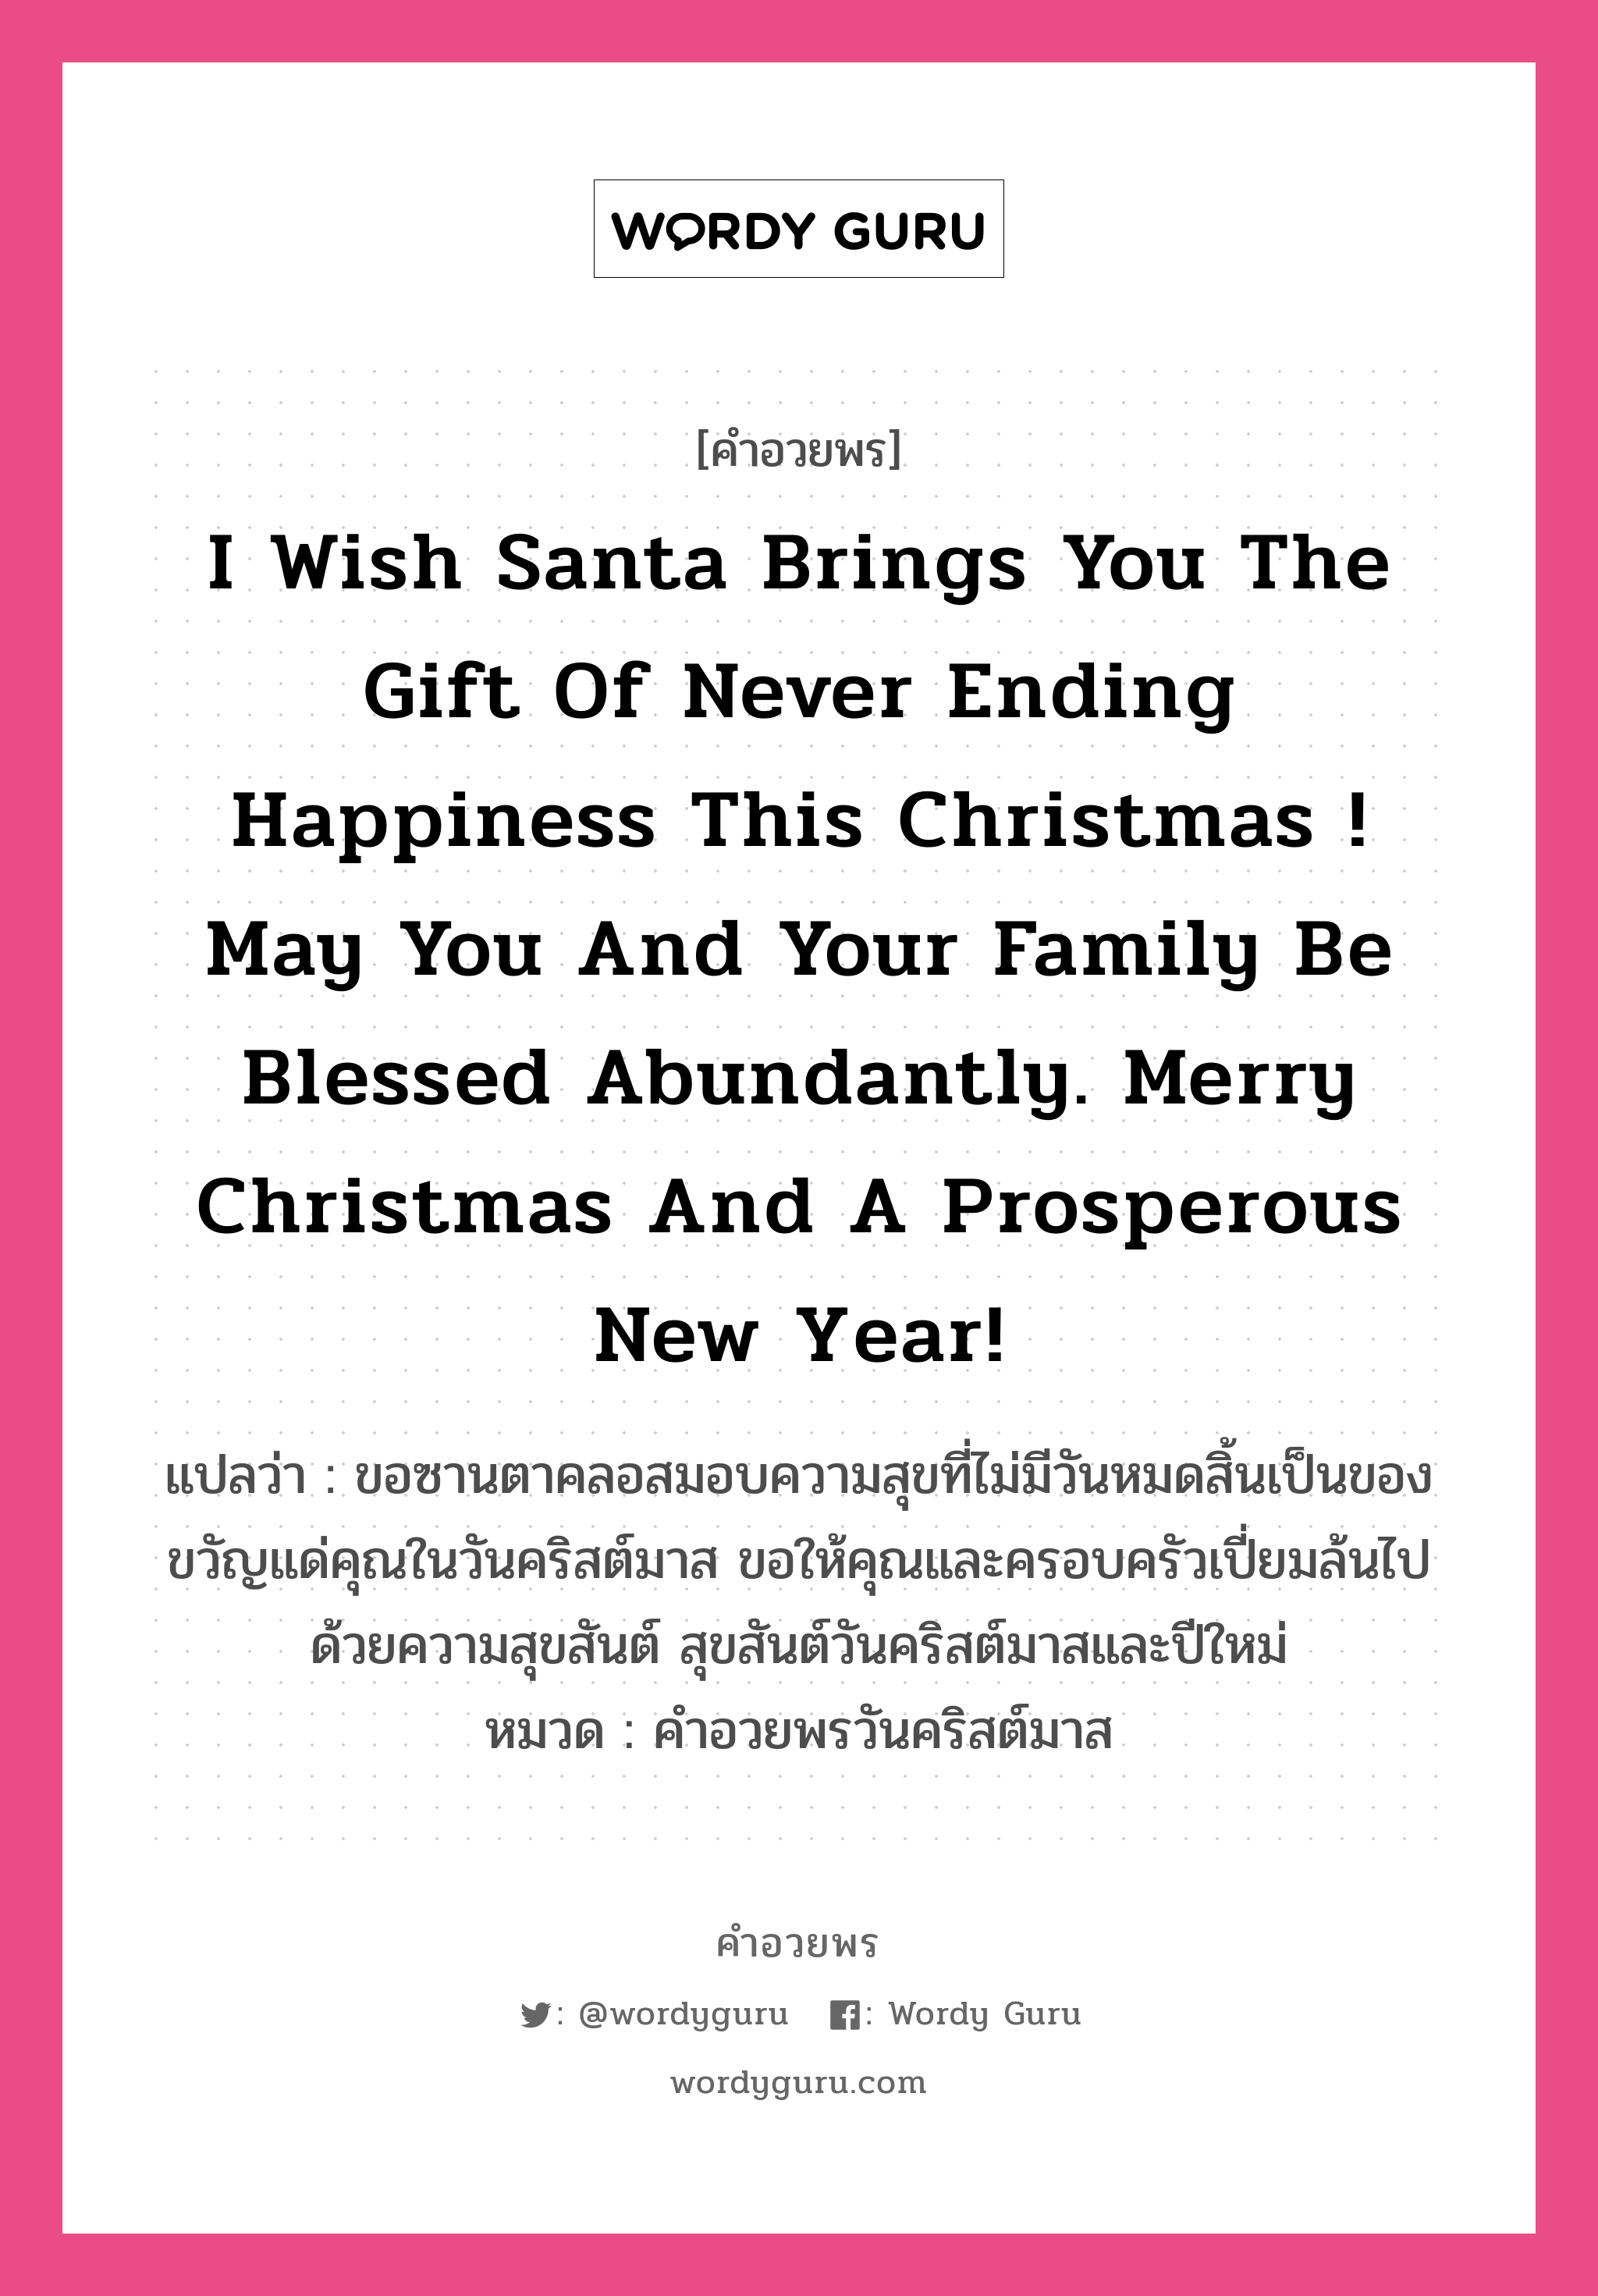 I wish Santa brings you the gift of never ending happiness this Christmas ! May you and your family be blessed abundantly. Merry Christmas and a Prosperous New Year! คำศัพท์ในกลุ่มประเภท คำอวยพรวันคริสต์มาส, แปลว่า ขอซานตาคลอสมอบความสุขที่ไม่มีวันหมดสิ้นเป็นของขวัญแด่คุณในวันคริสต์มาส ขอให้คุณและครอบครัวเปี่ยมล้นไปด้วยความสุขสันต์ สุขสันต์วันคริสต์มาสและปีใหม่ หมวด คำอวยพรวันคริสต์มาส หมวด คำอวยพรวันคริสต์มาส